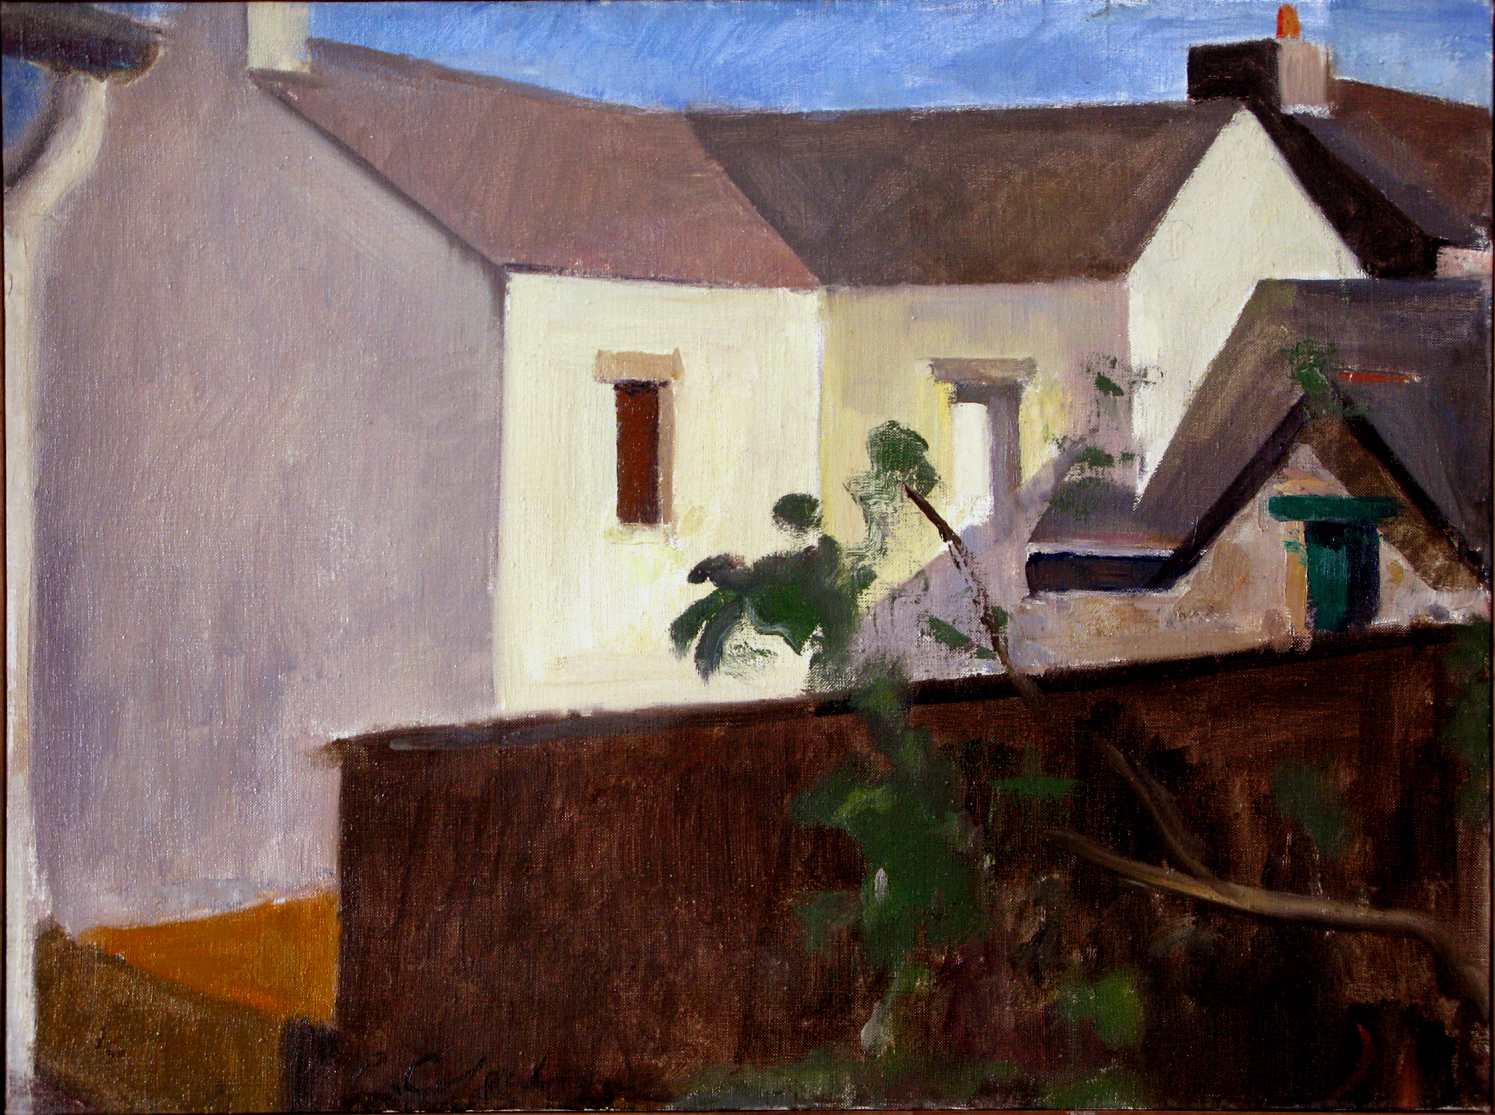 Rochefort Villa, 18" x 24", oil on linen, 2003.